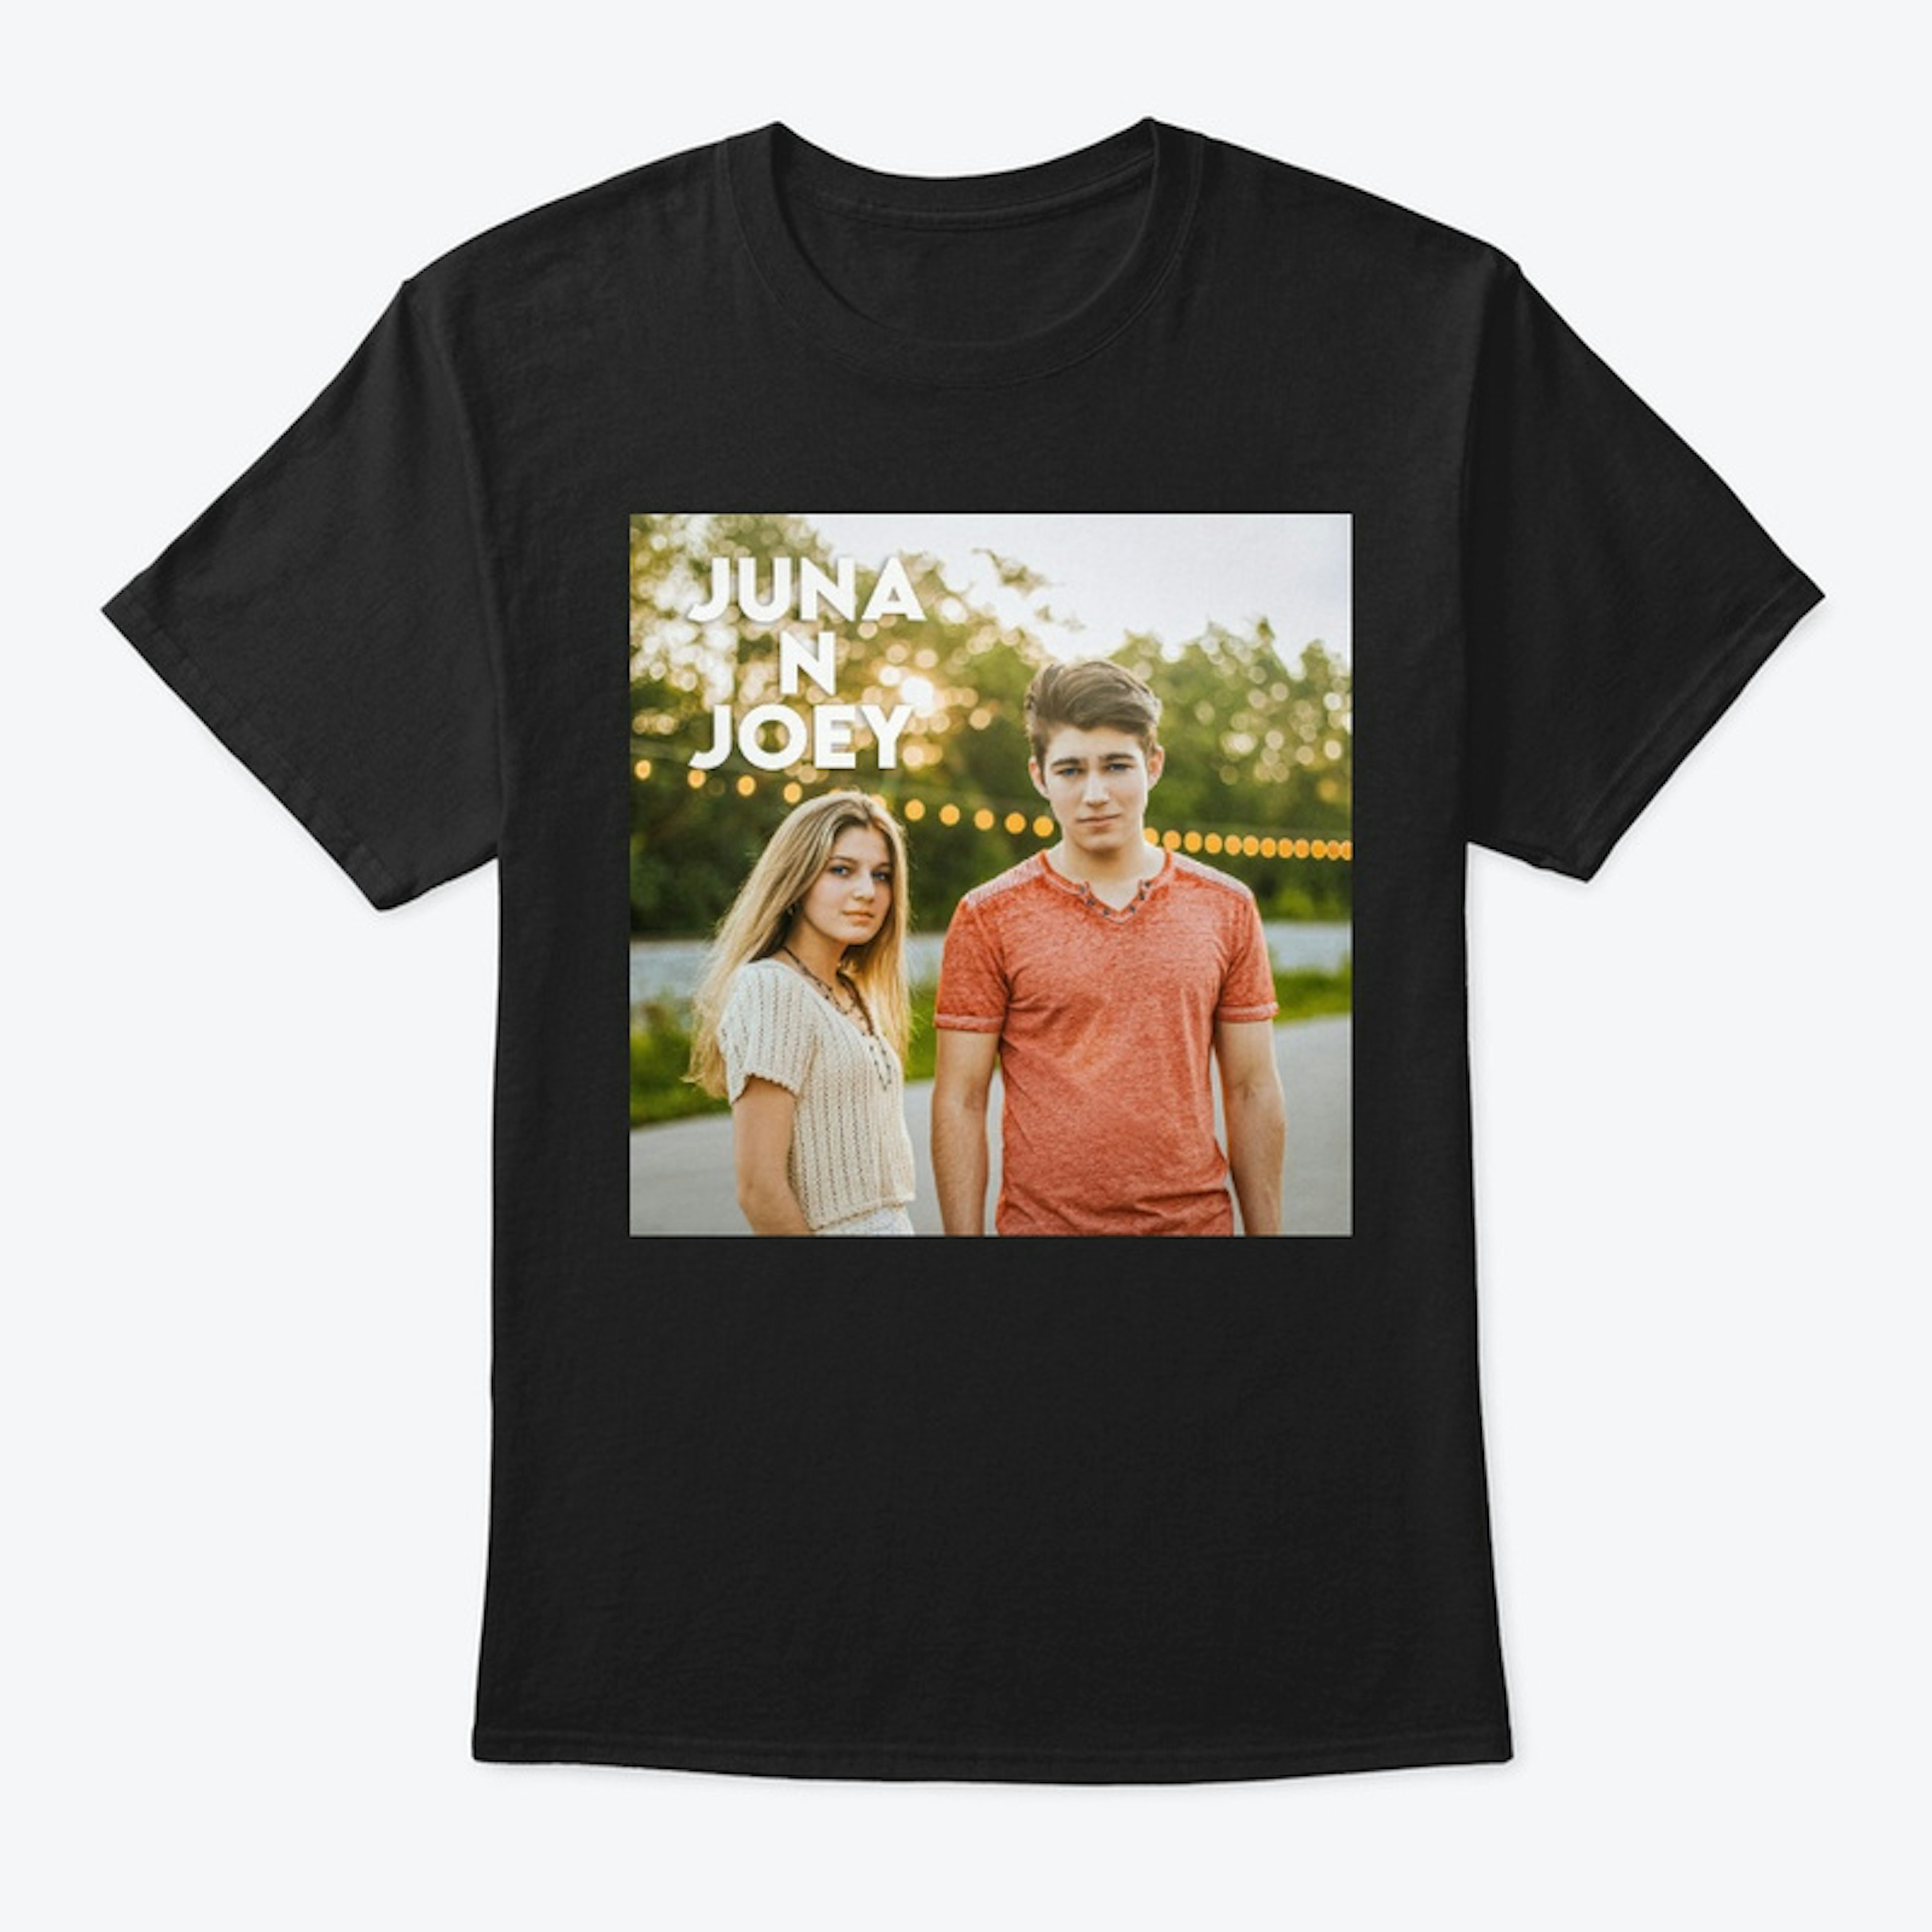 Juna N Joey T-Shirt